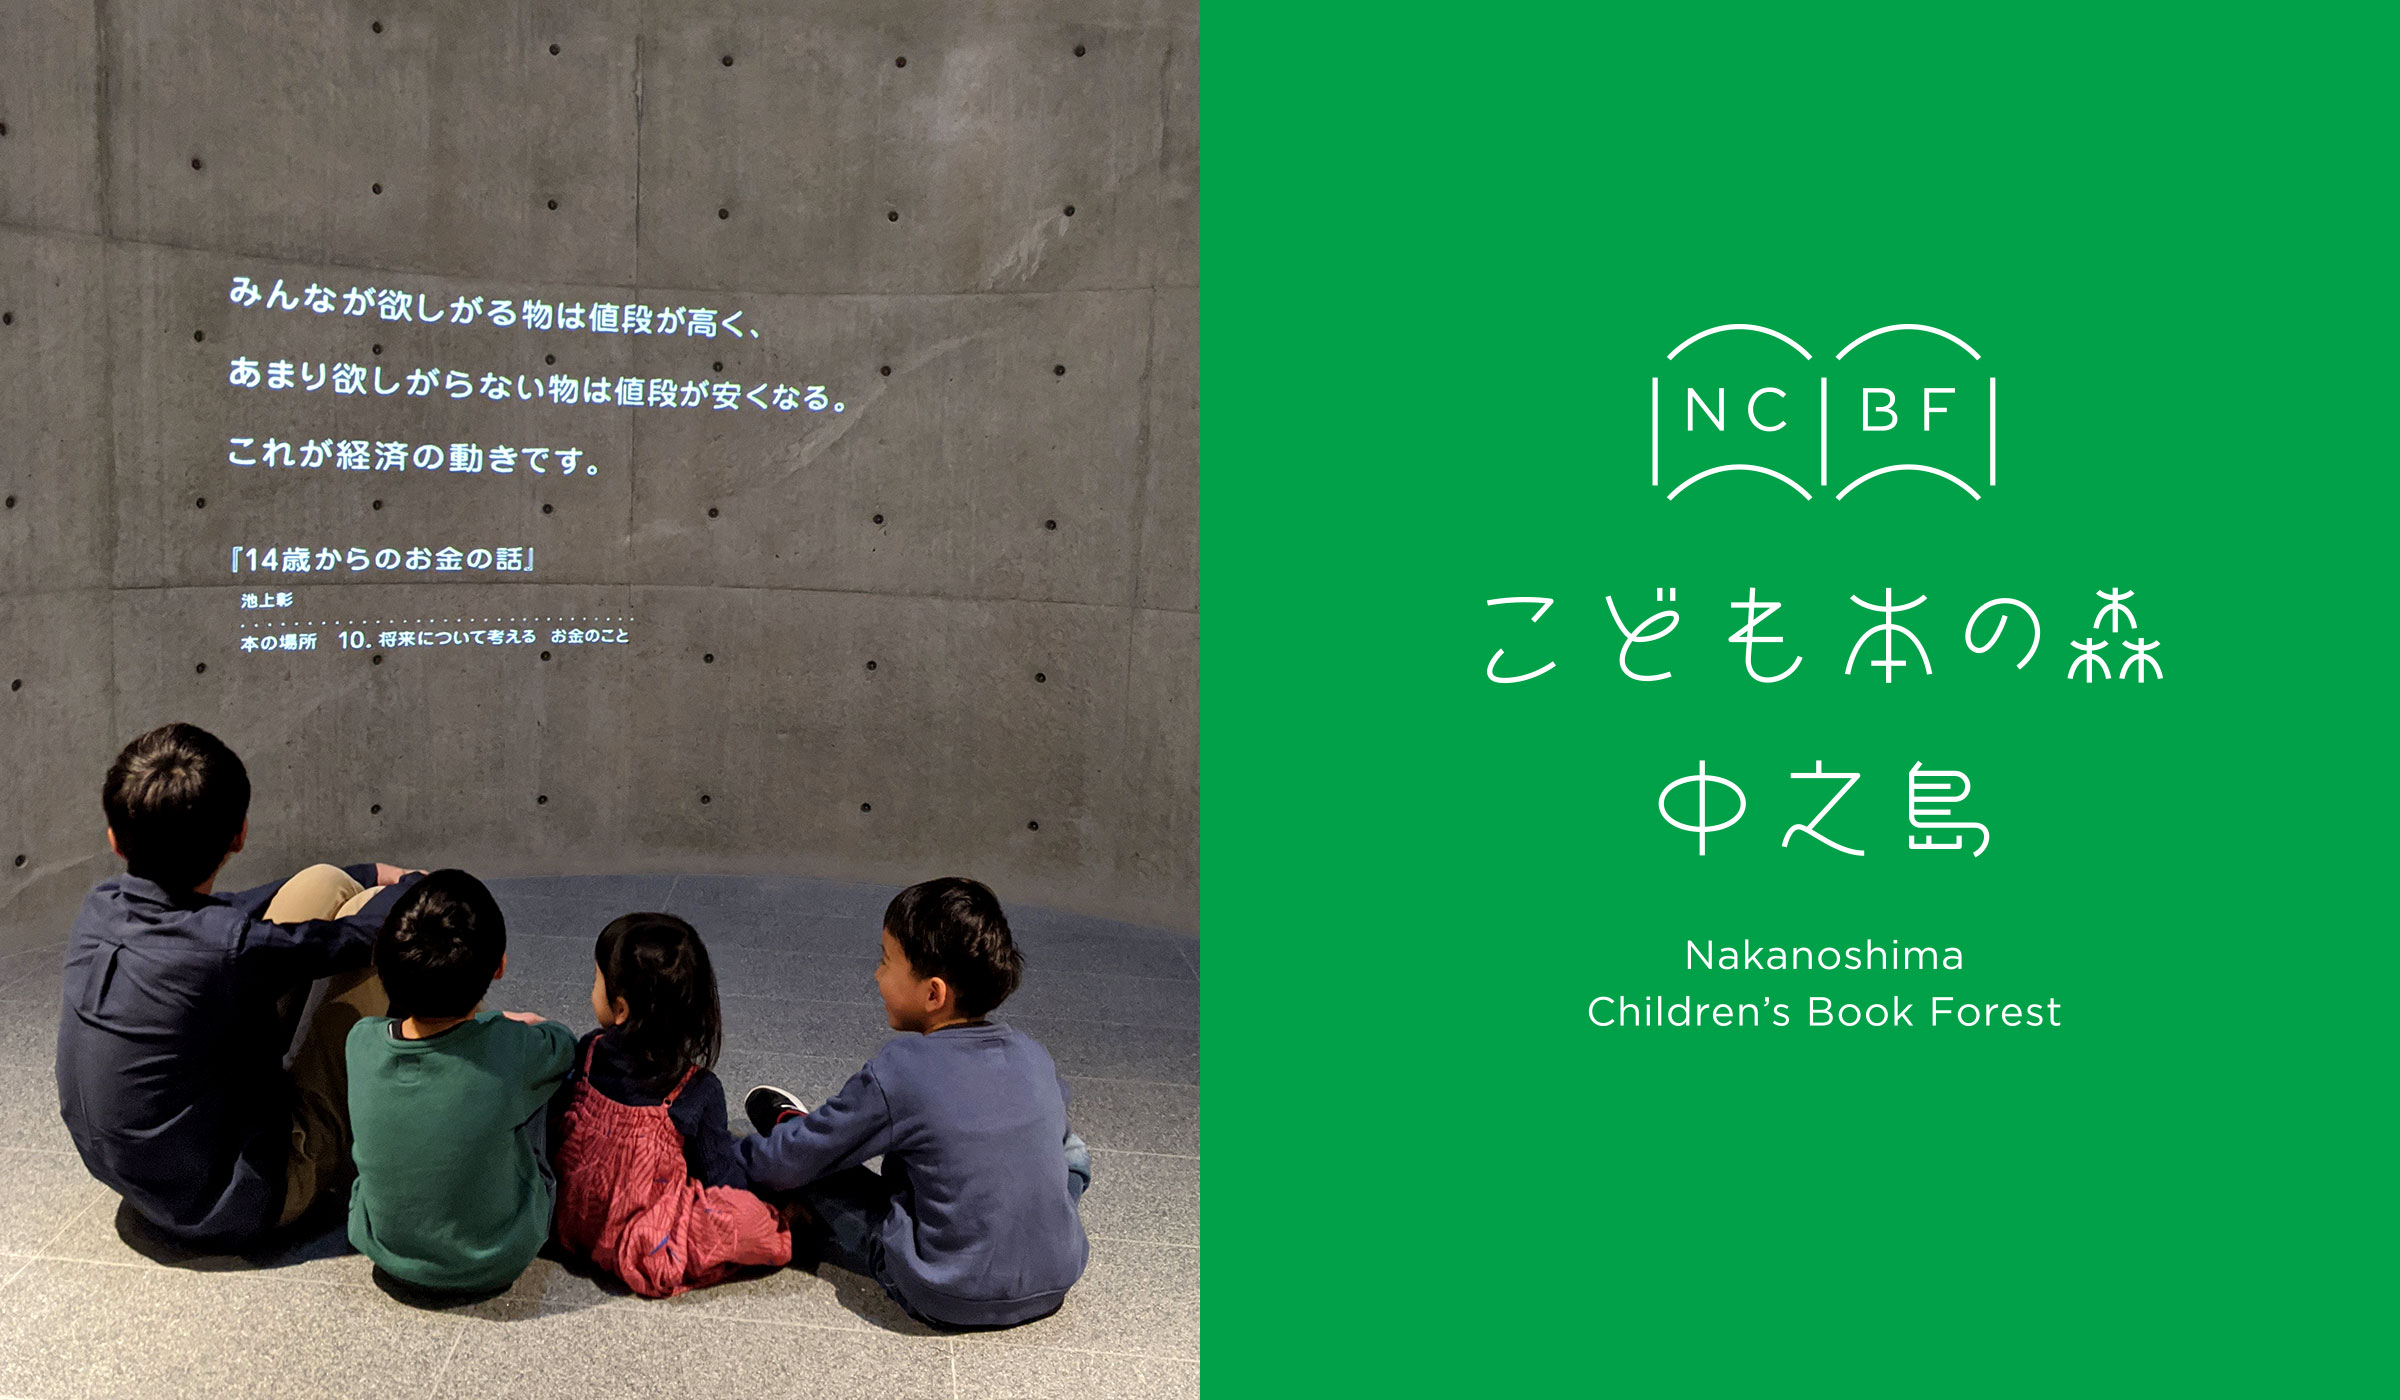 Aphorisms in Animation: Nakanoshima Children’s Book Forest